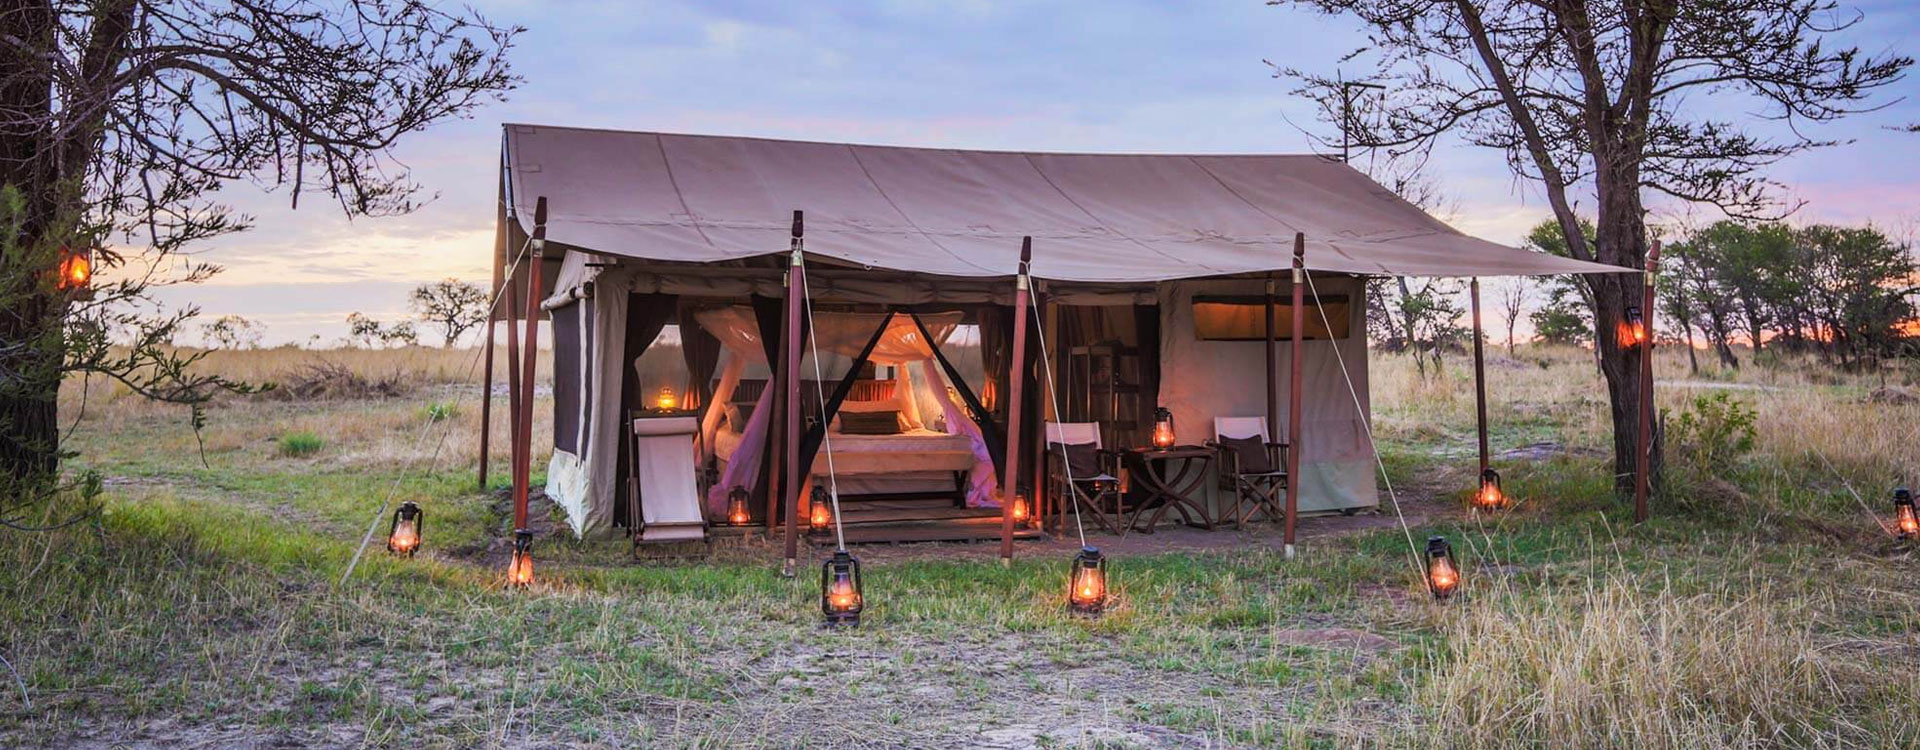 7 Days Camping Serengeti Explorer